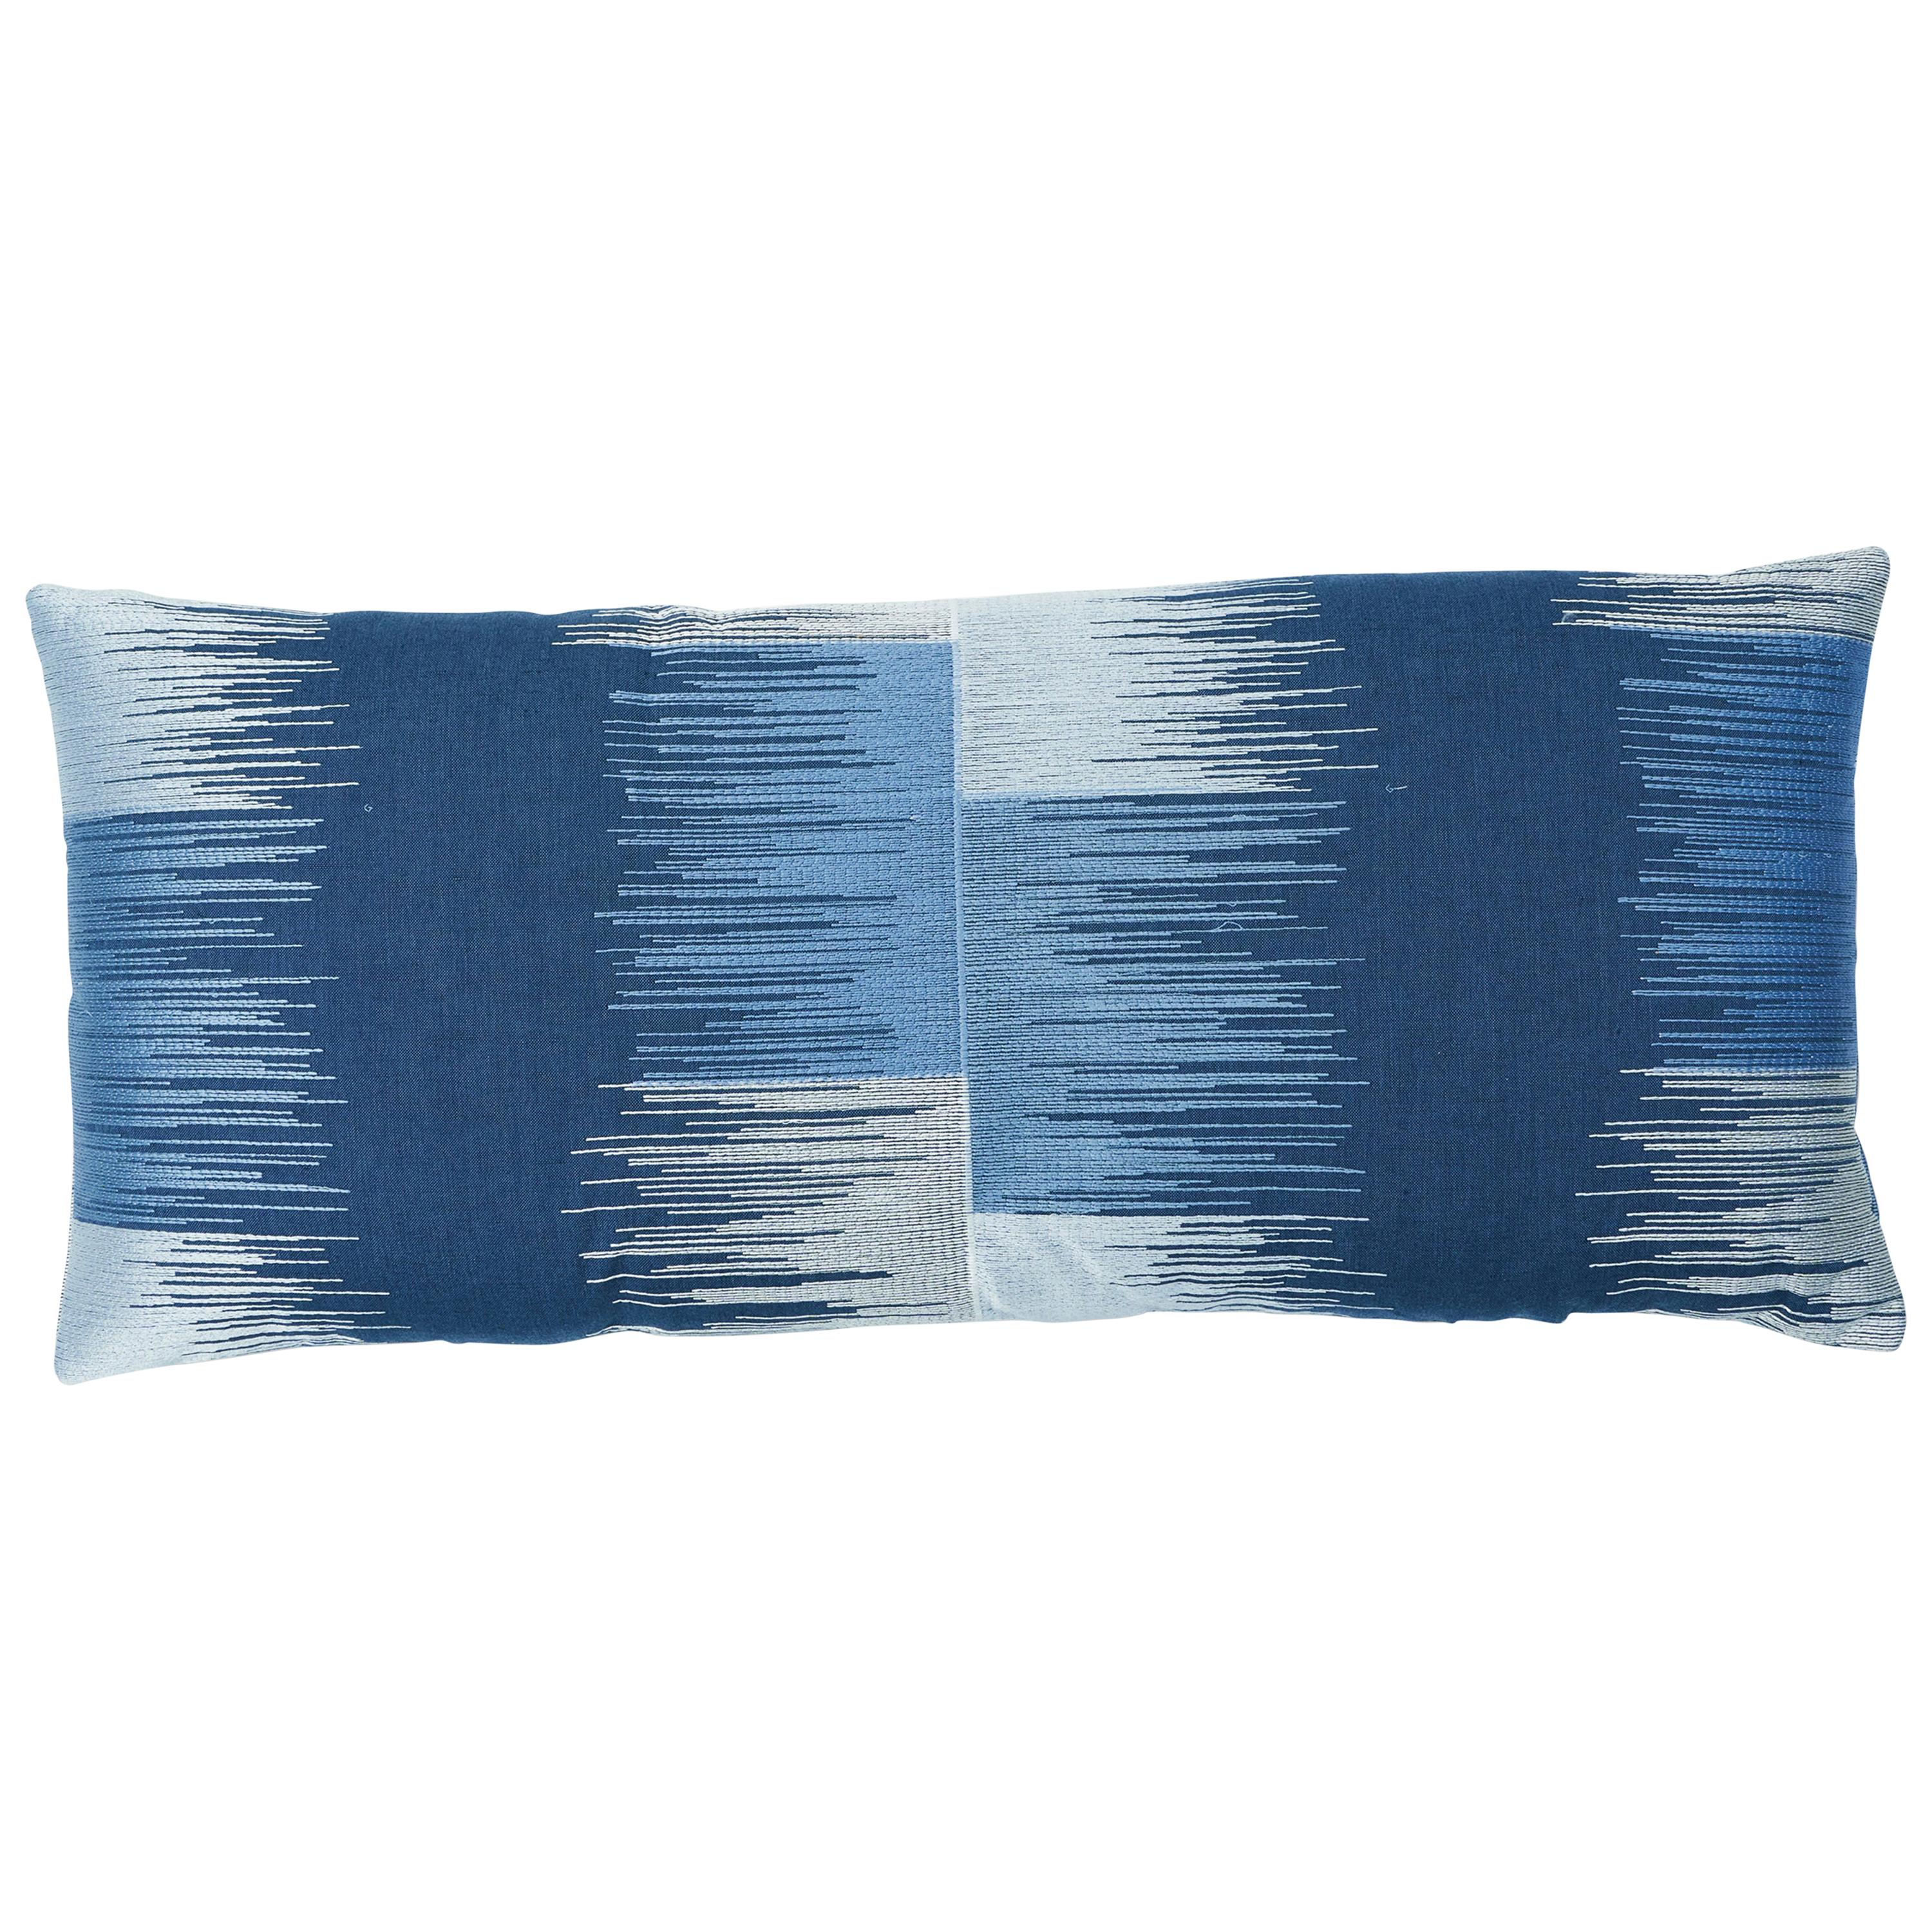 Schumacher Sunburst Stripe Embroidery Pillow in Blue For Sale